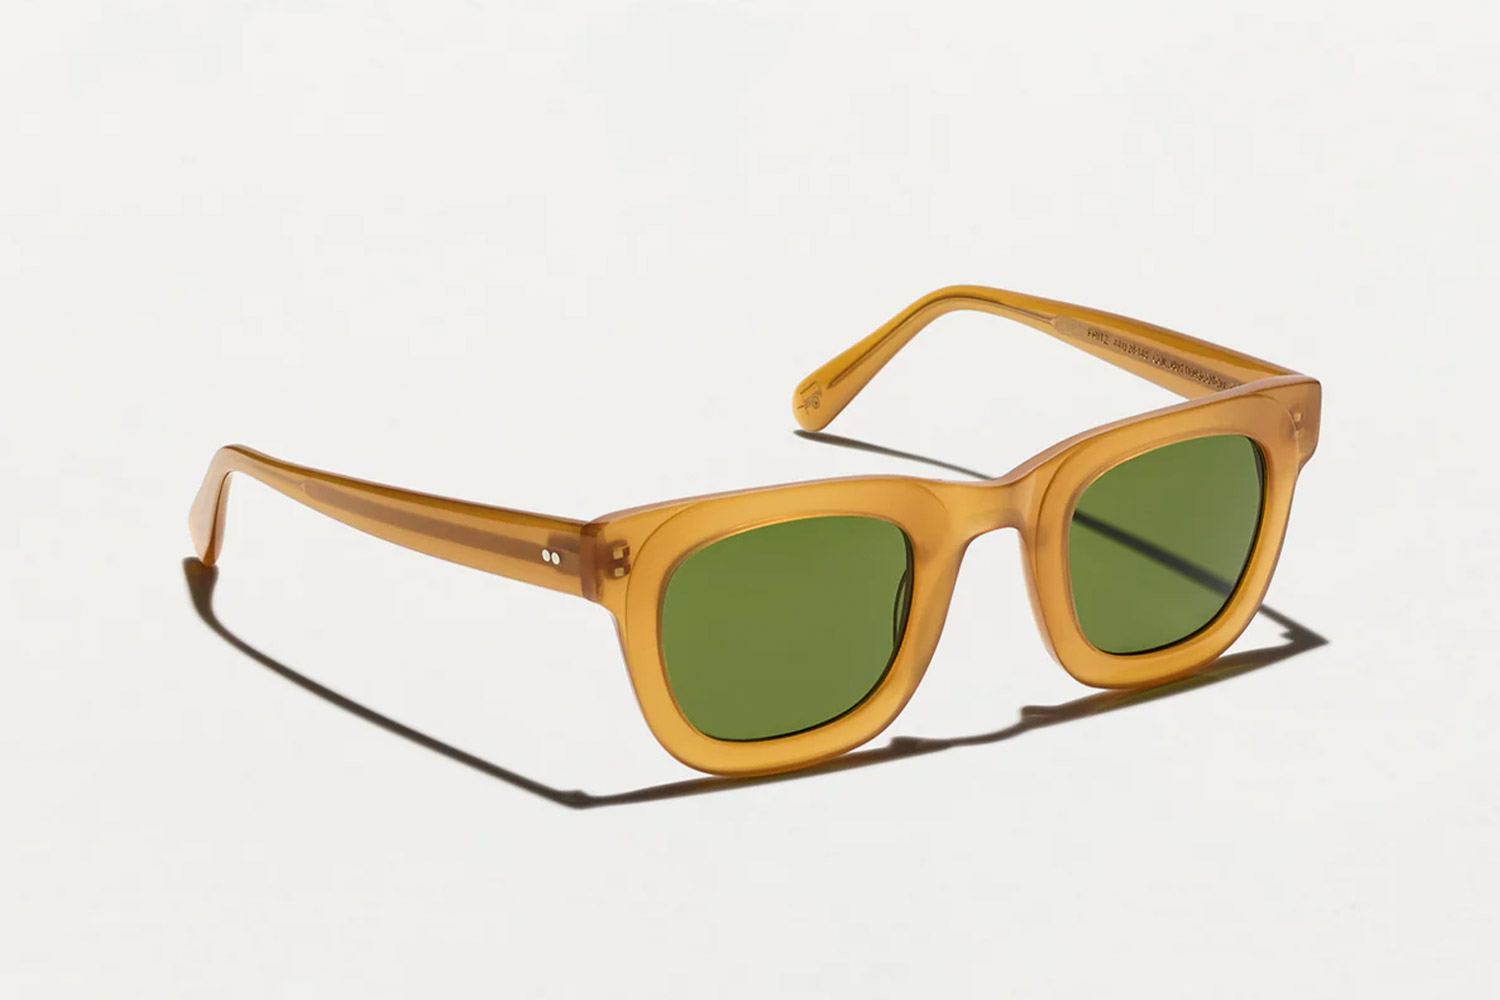 Moscot Fritz sunglasses